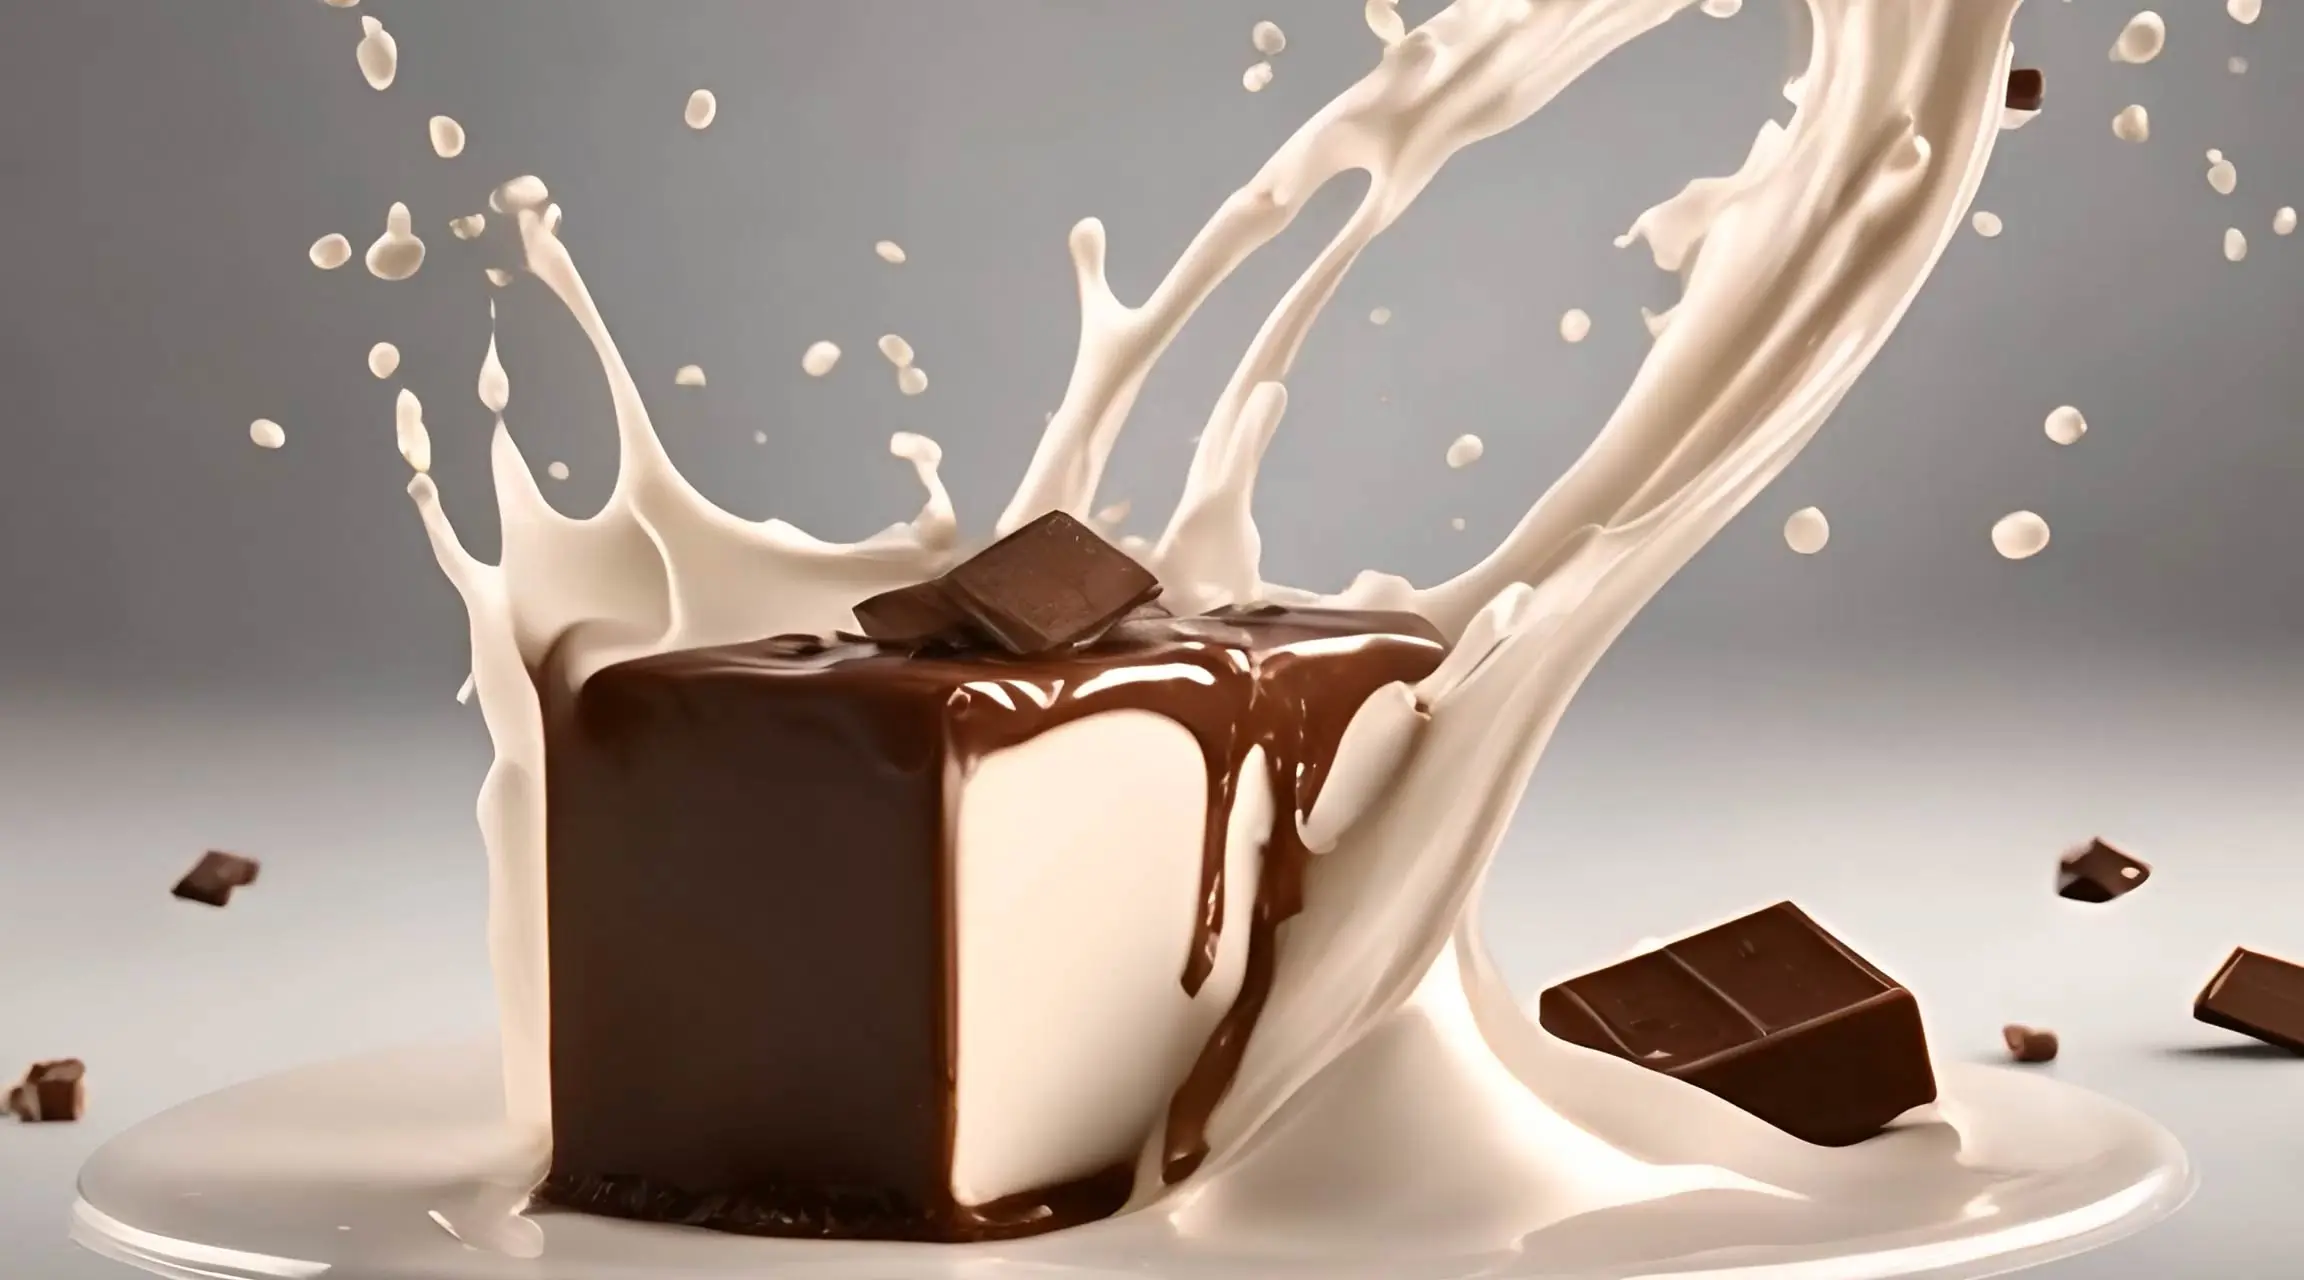 Velvety Chocolate and Milk Collision Flow Video